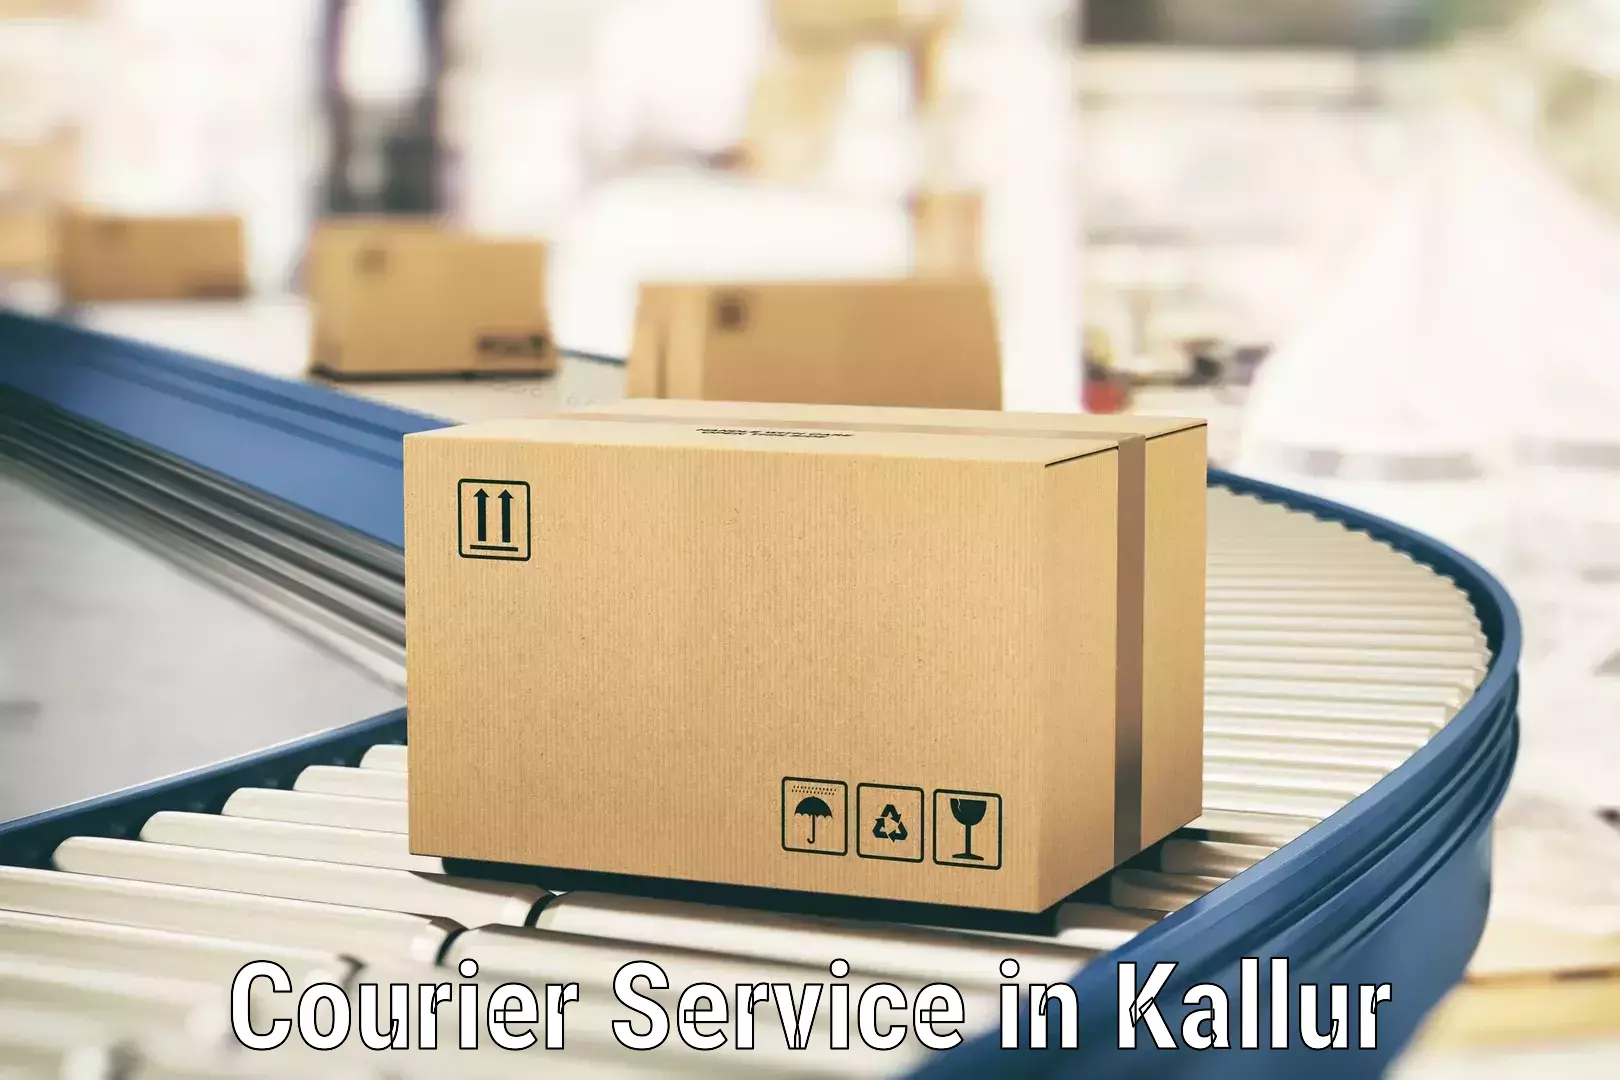 Customer-friendly courier services in Kallur